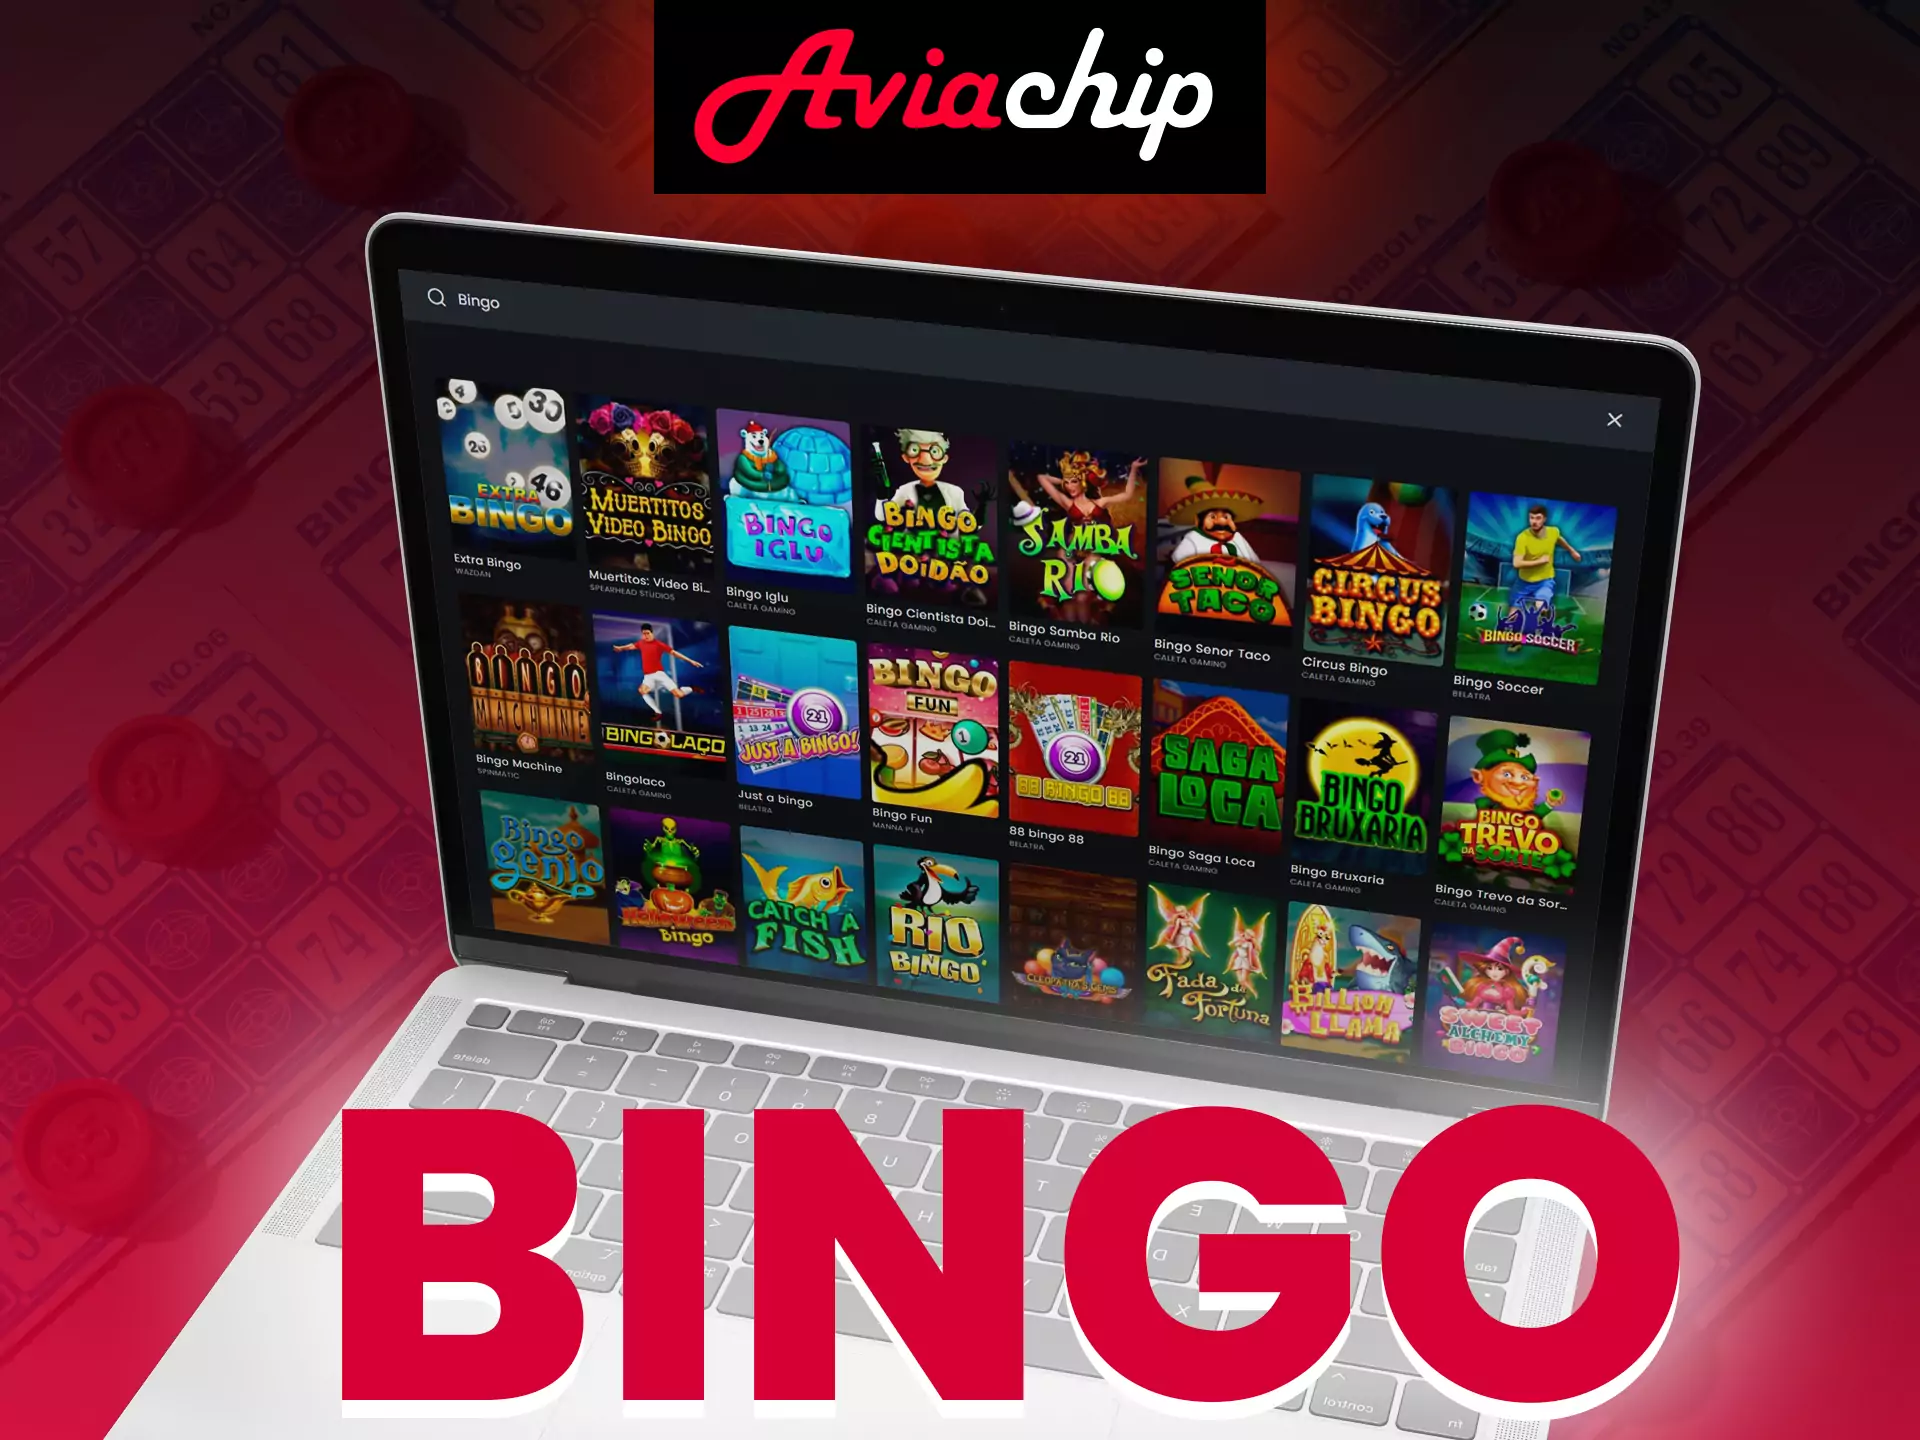 Play bingo on Aviachip.